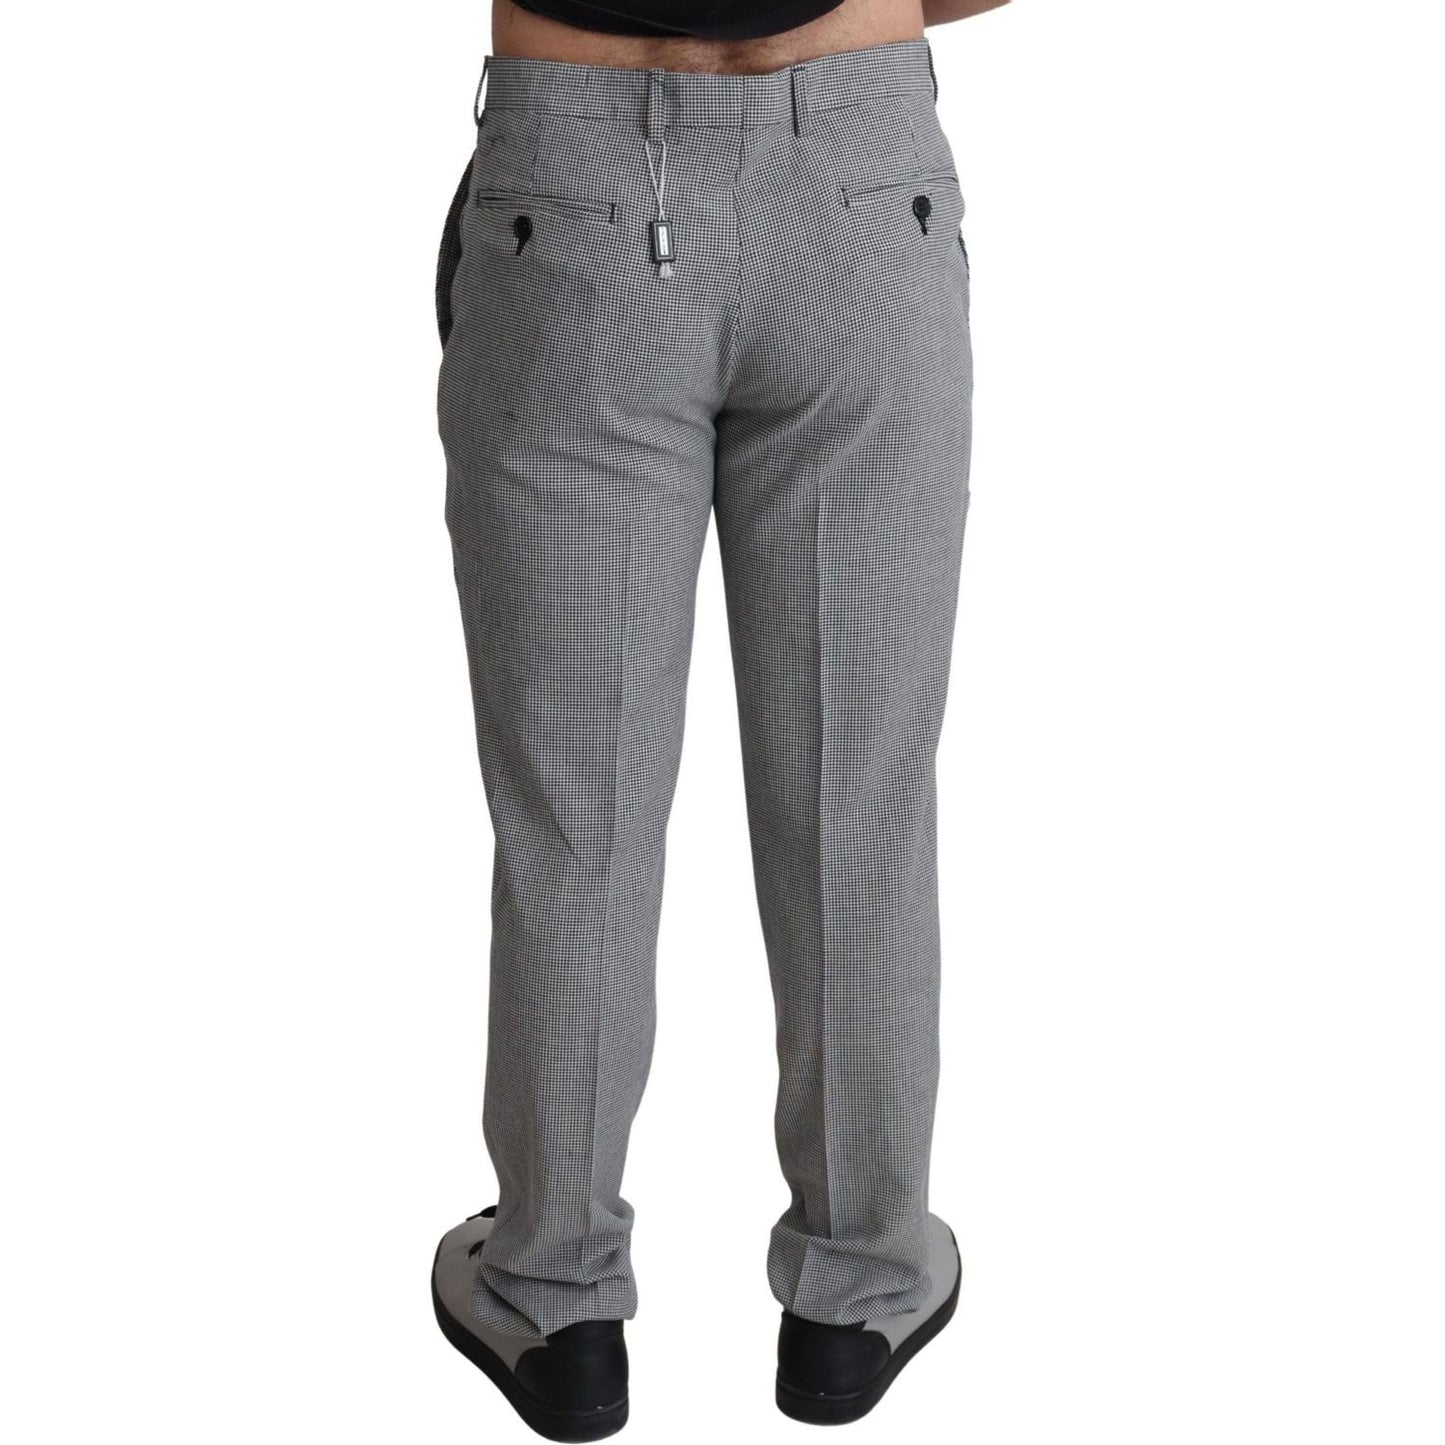 BENCIVENGA Elegant Checkered Wool Formal Trousers gray-wool-checkered-dress-men-formal-trouser-pants IMG_2354-scaled-0e55b988-f96.jpg